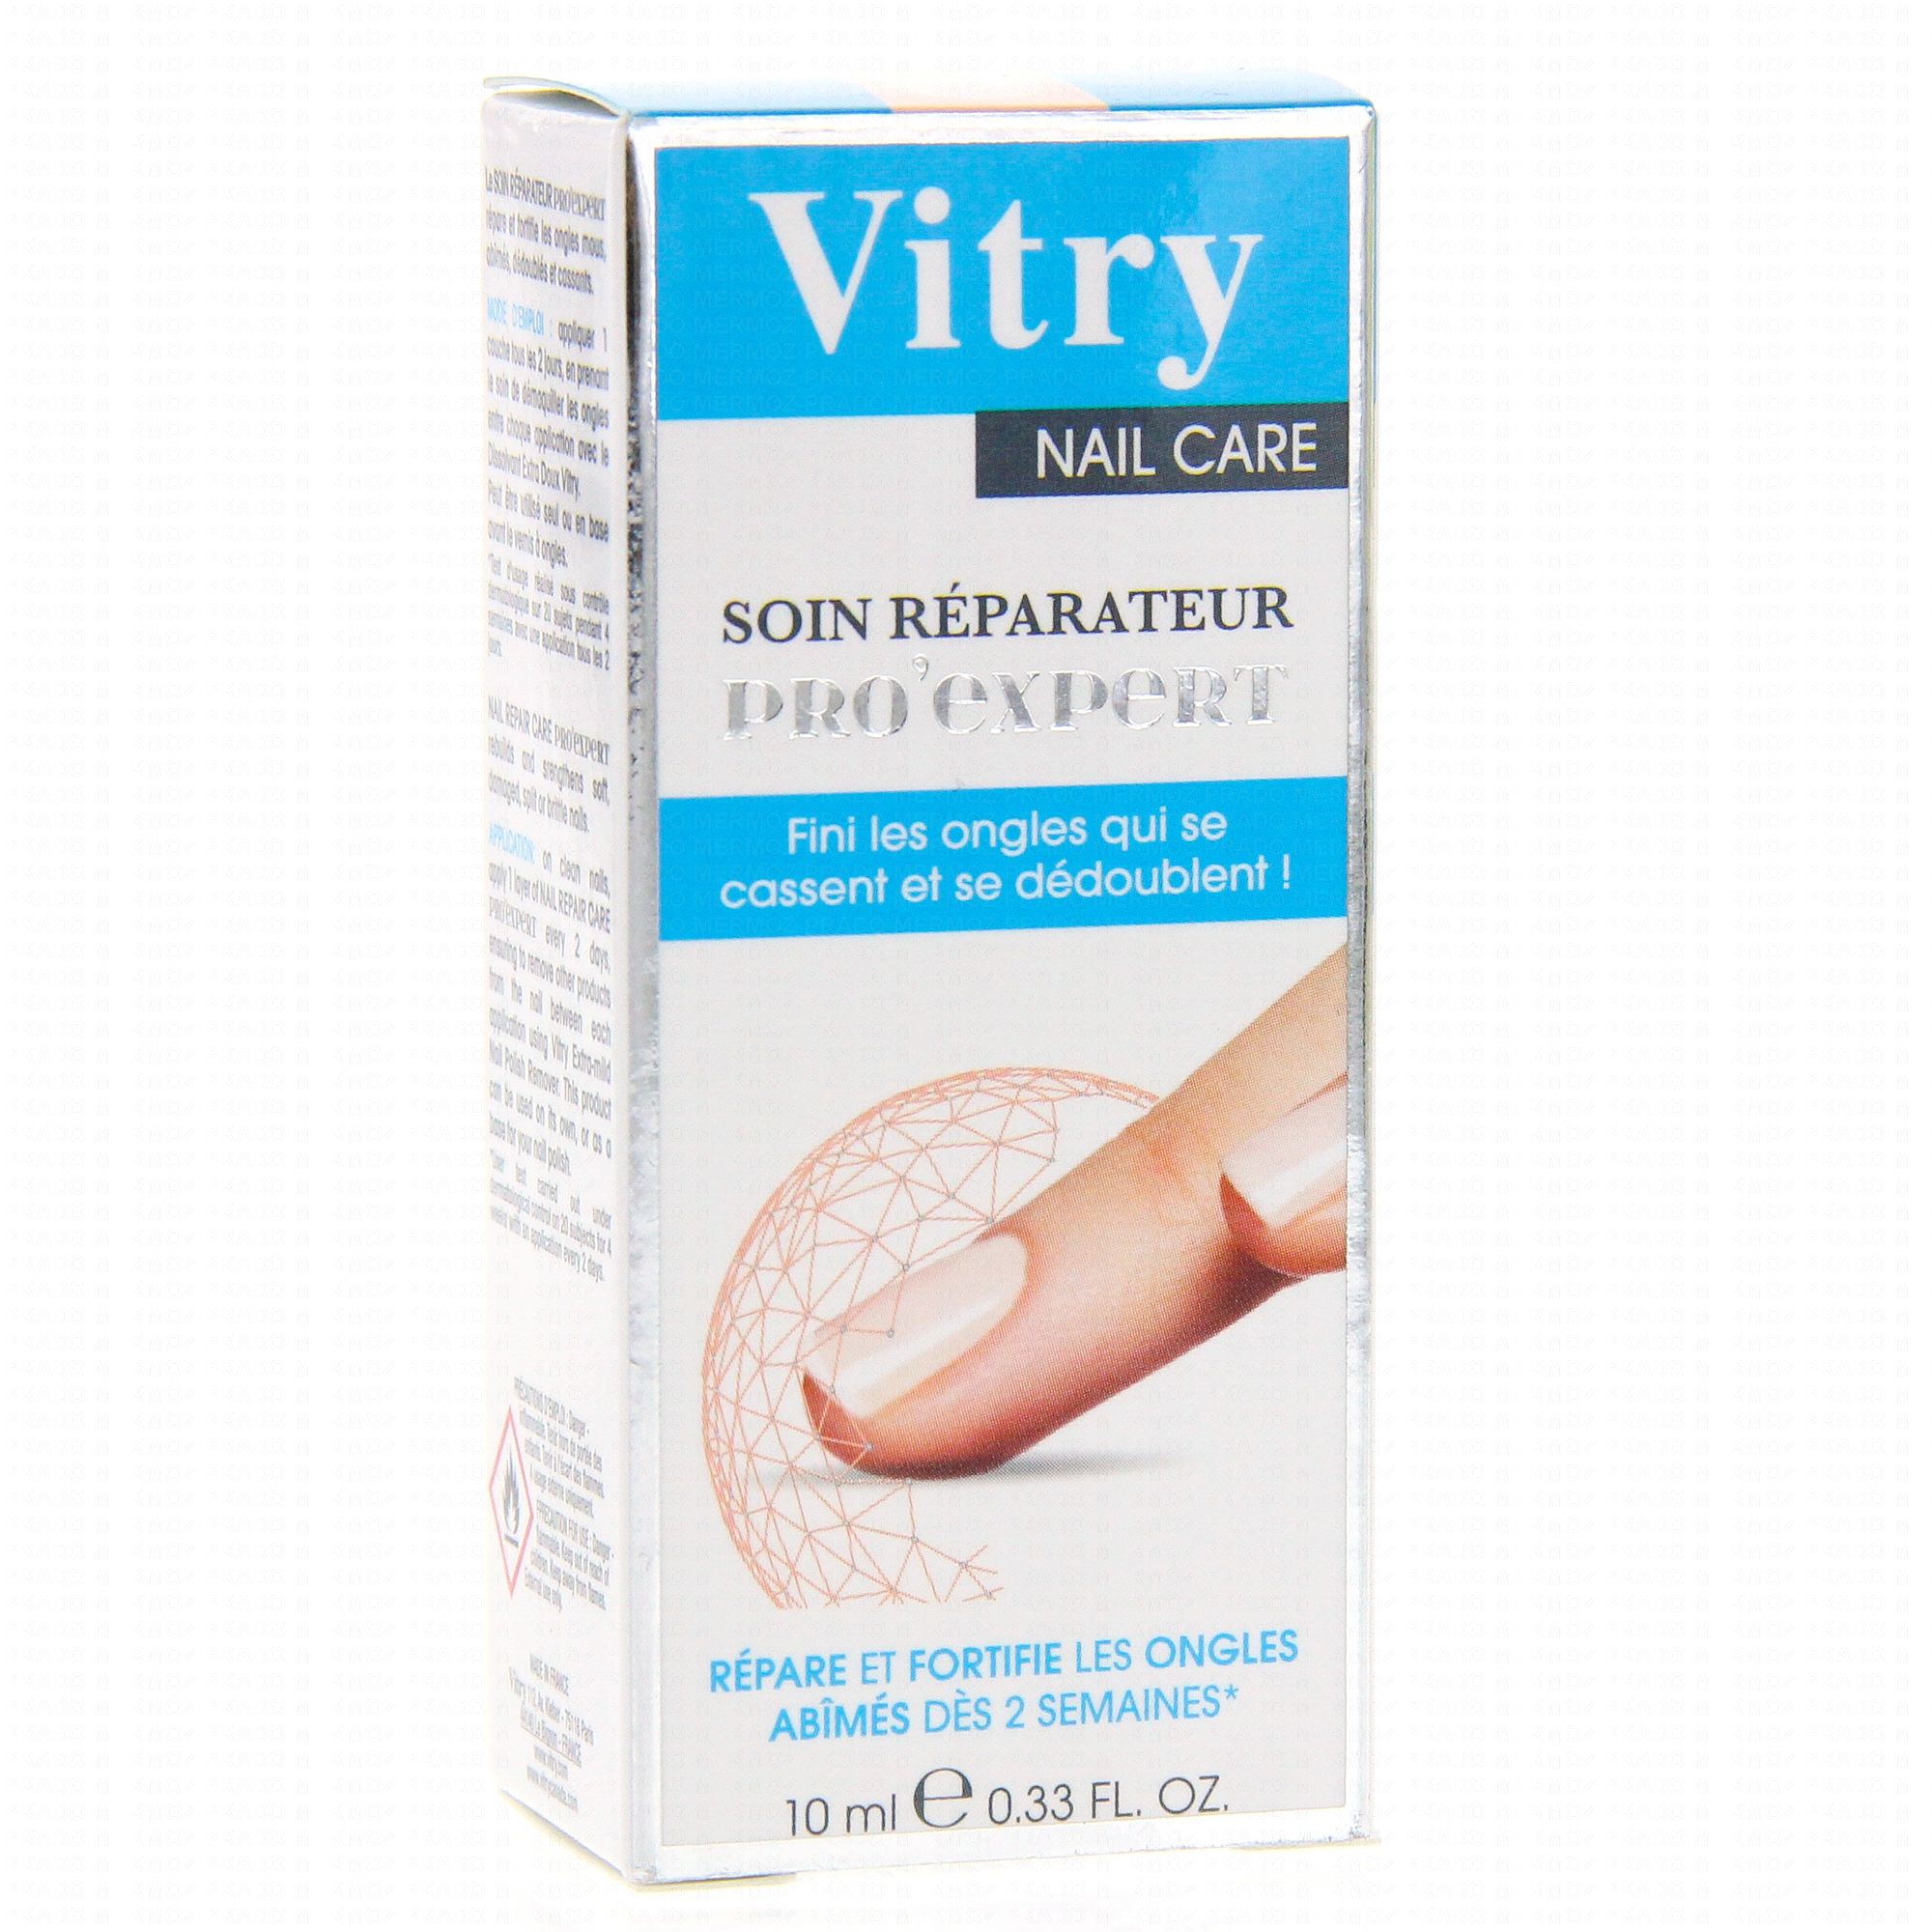 VITRY Nail Care - Soin réparateur flacon 10ml - Parapharmacie Prado Mermoz